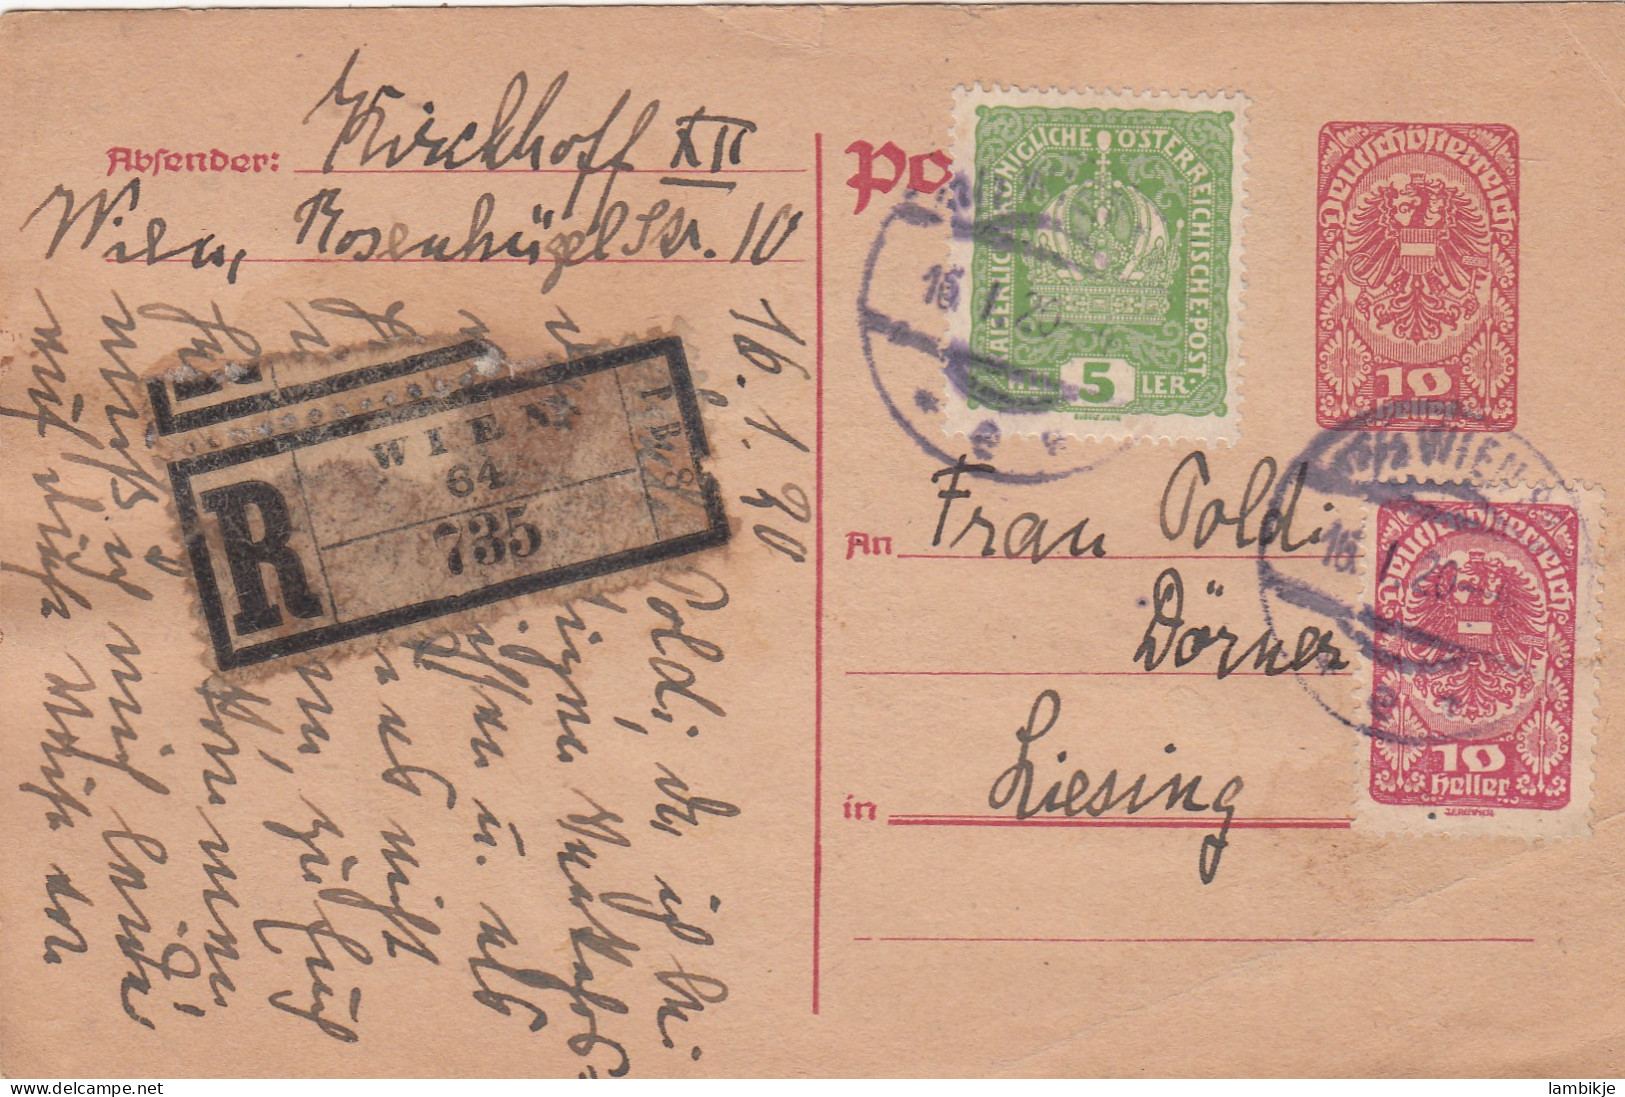 Österreich R Postkarte 1920 - Lettres & Documents